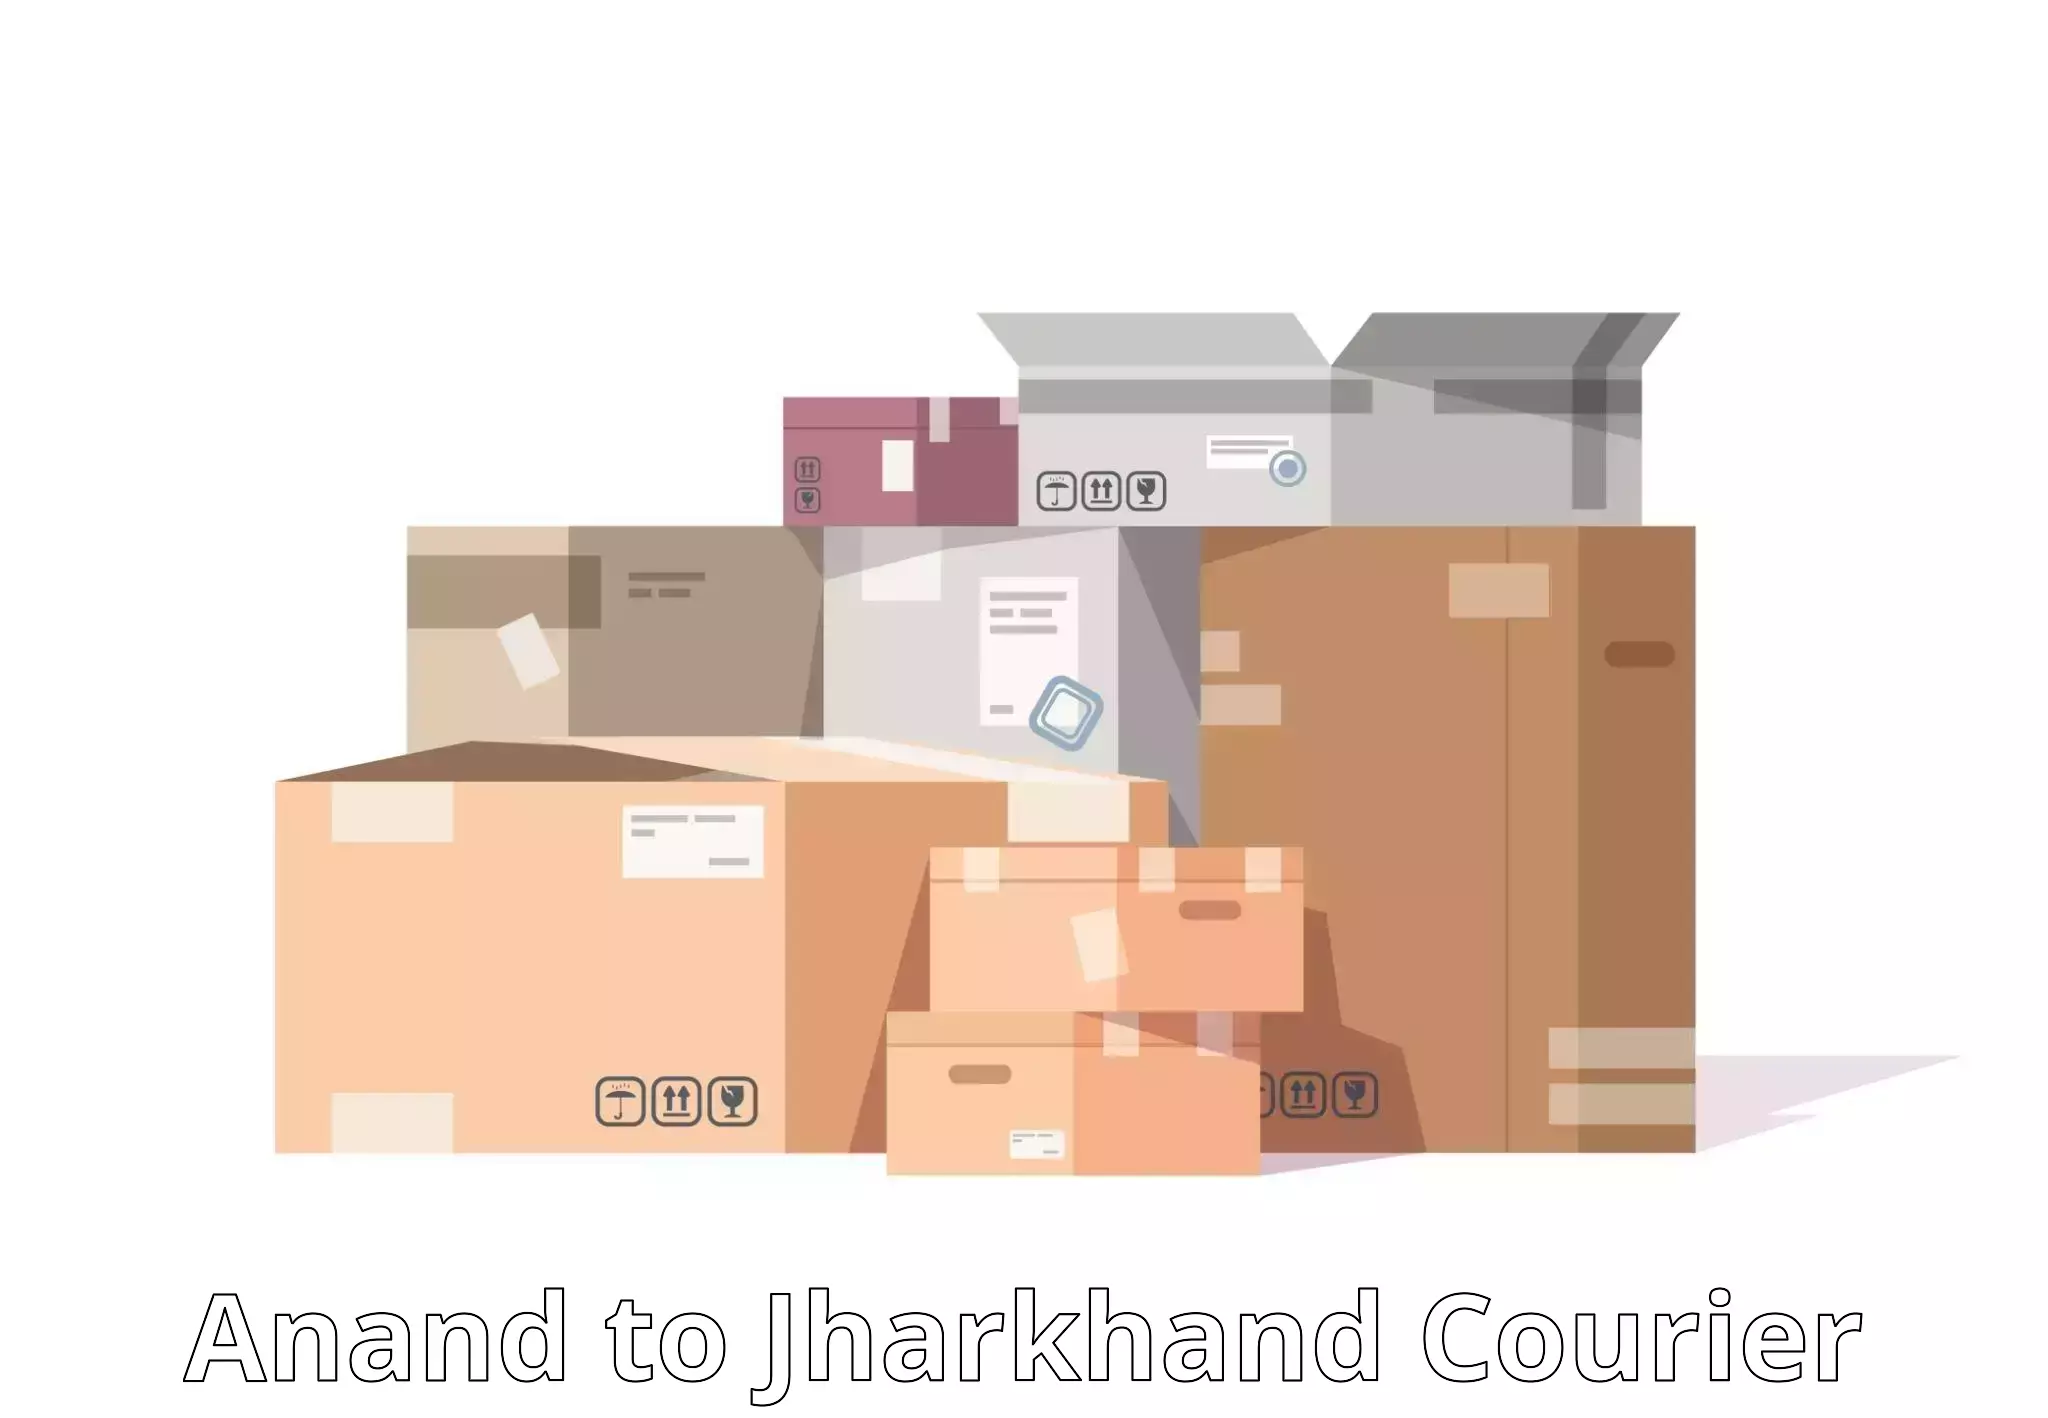 Efficient logistics management Anand to Peterbar